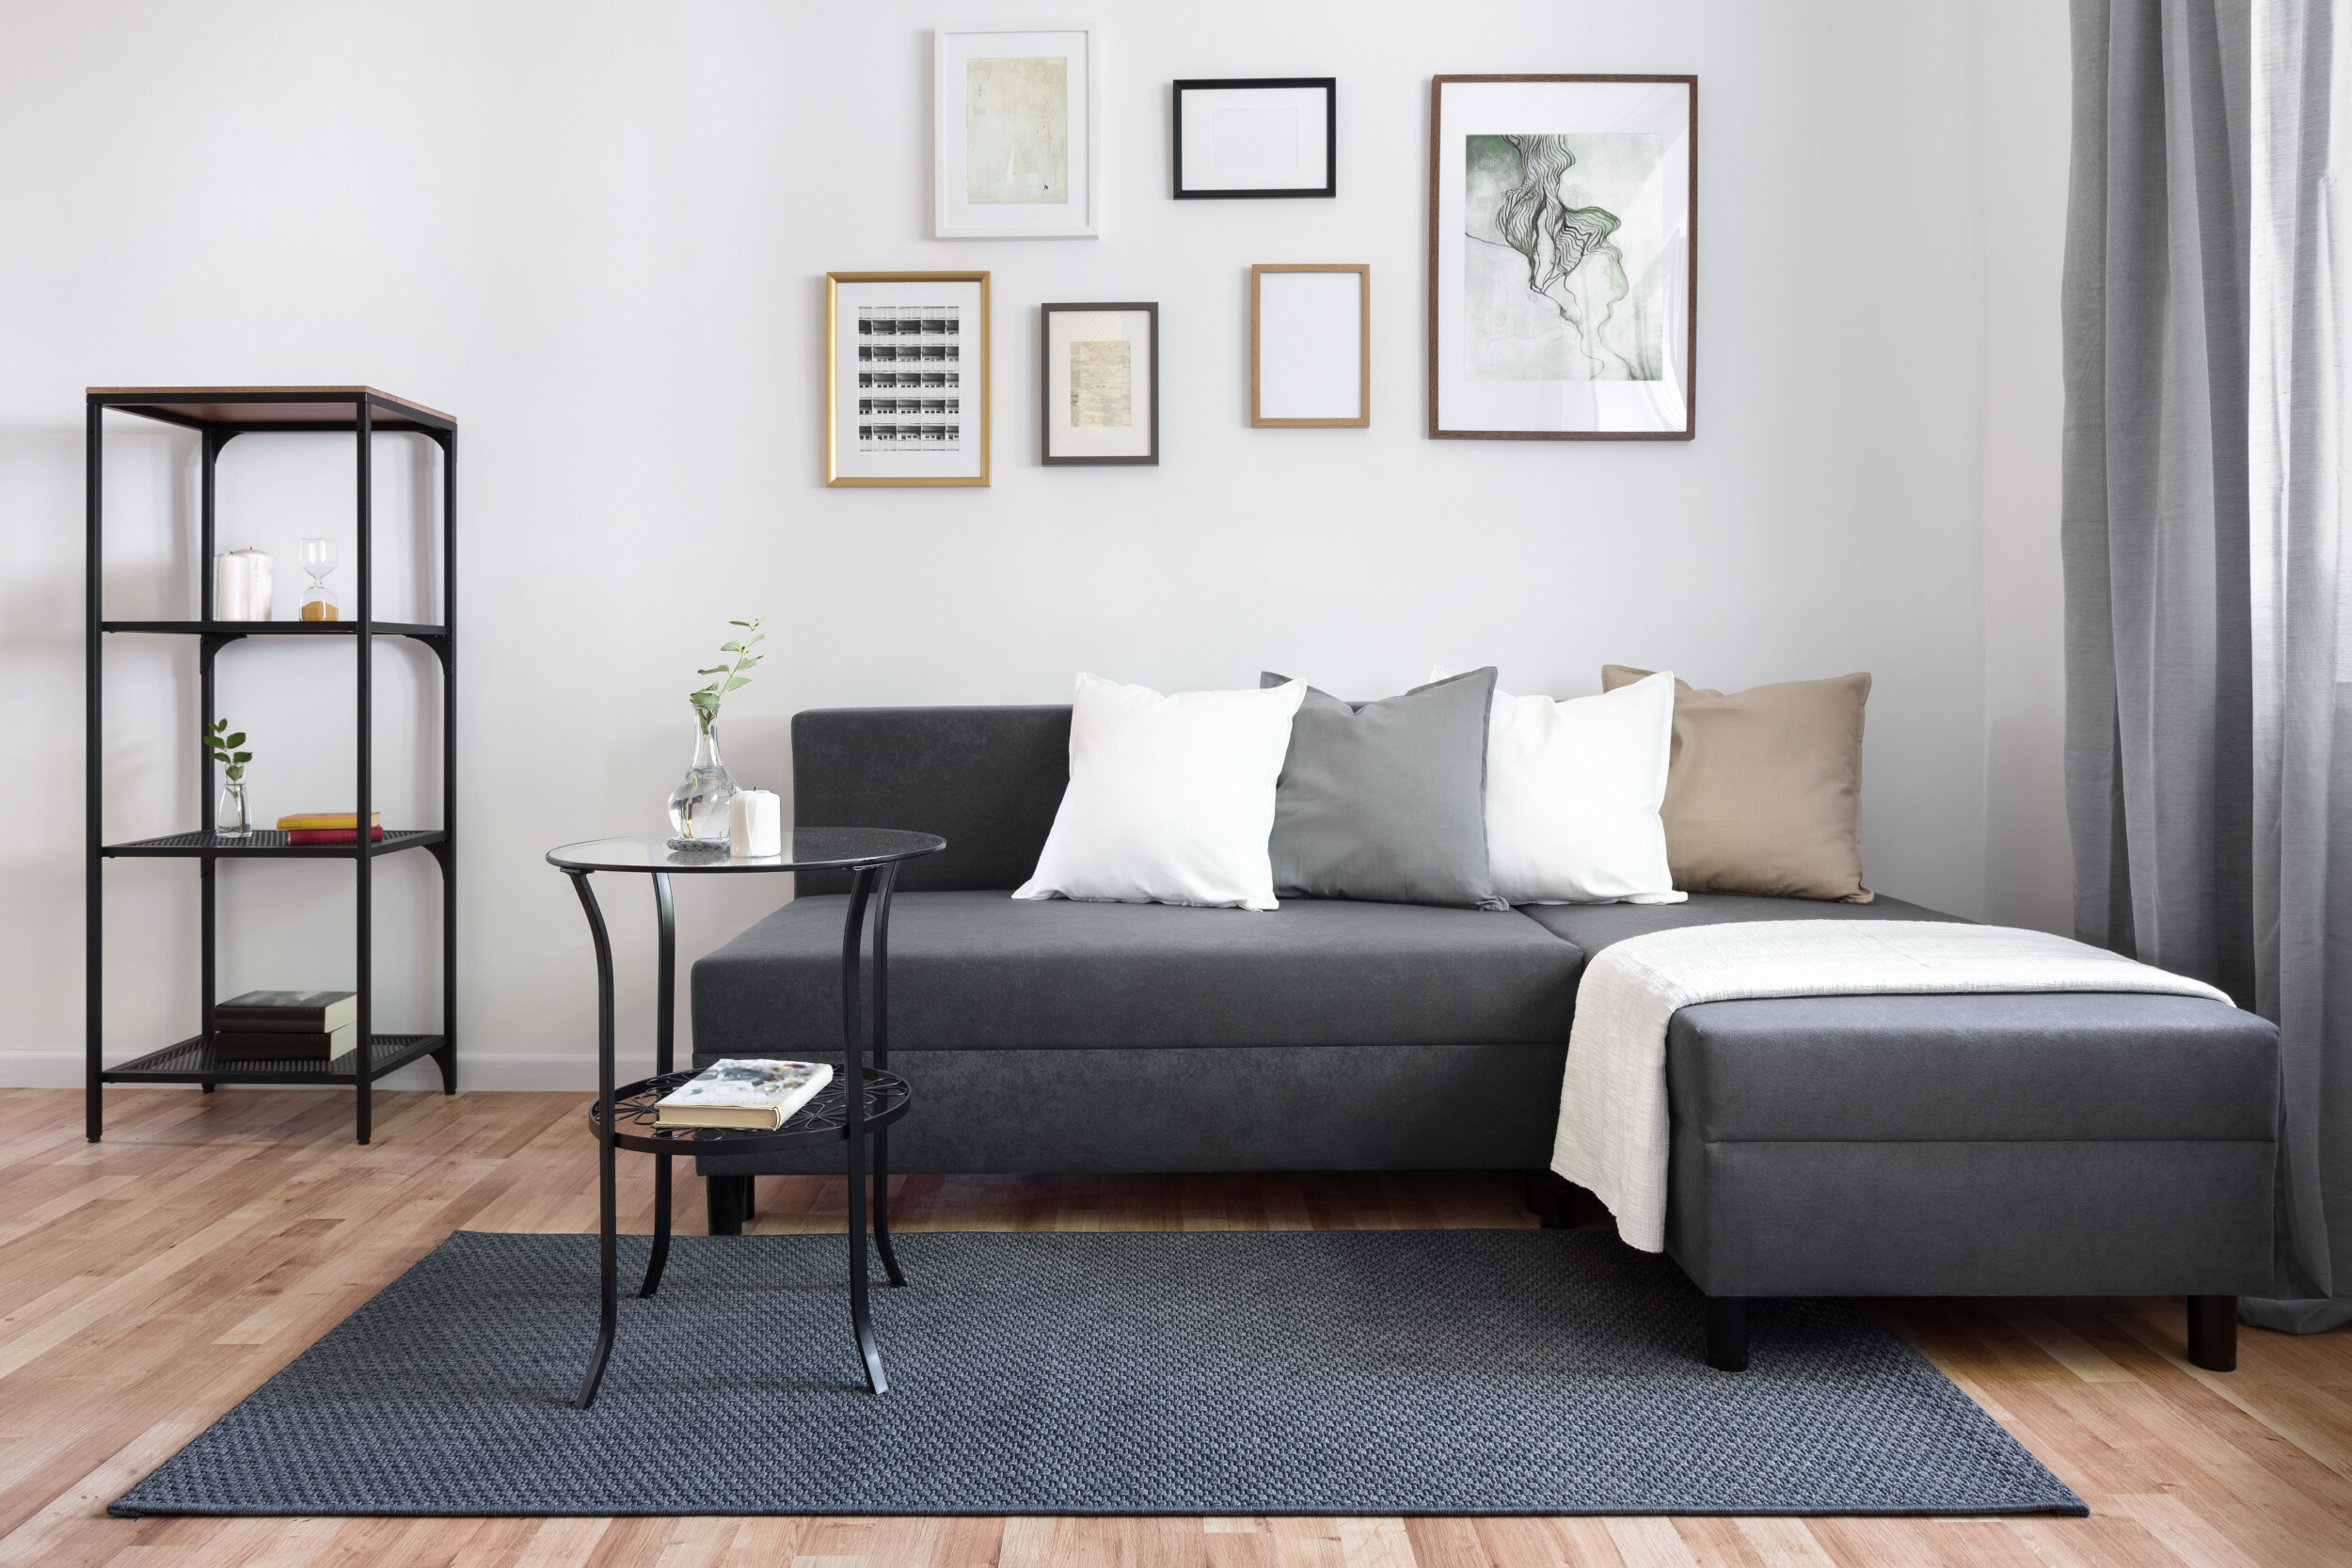 grey sofa living room